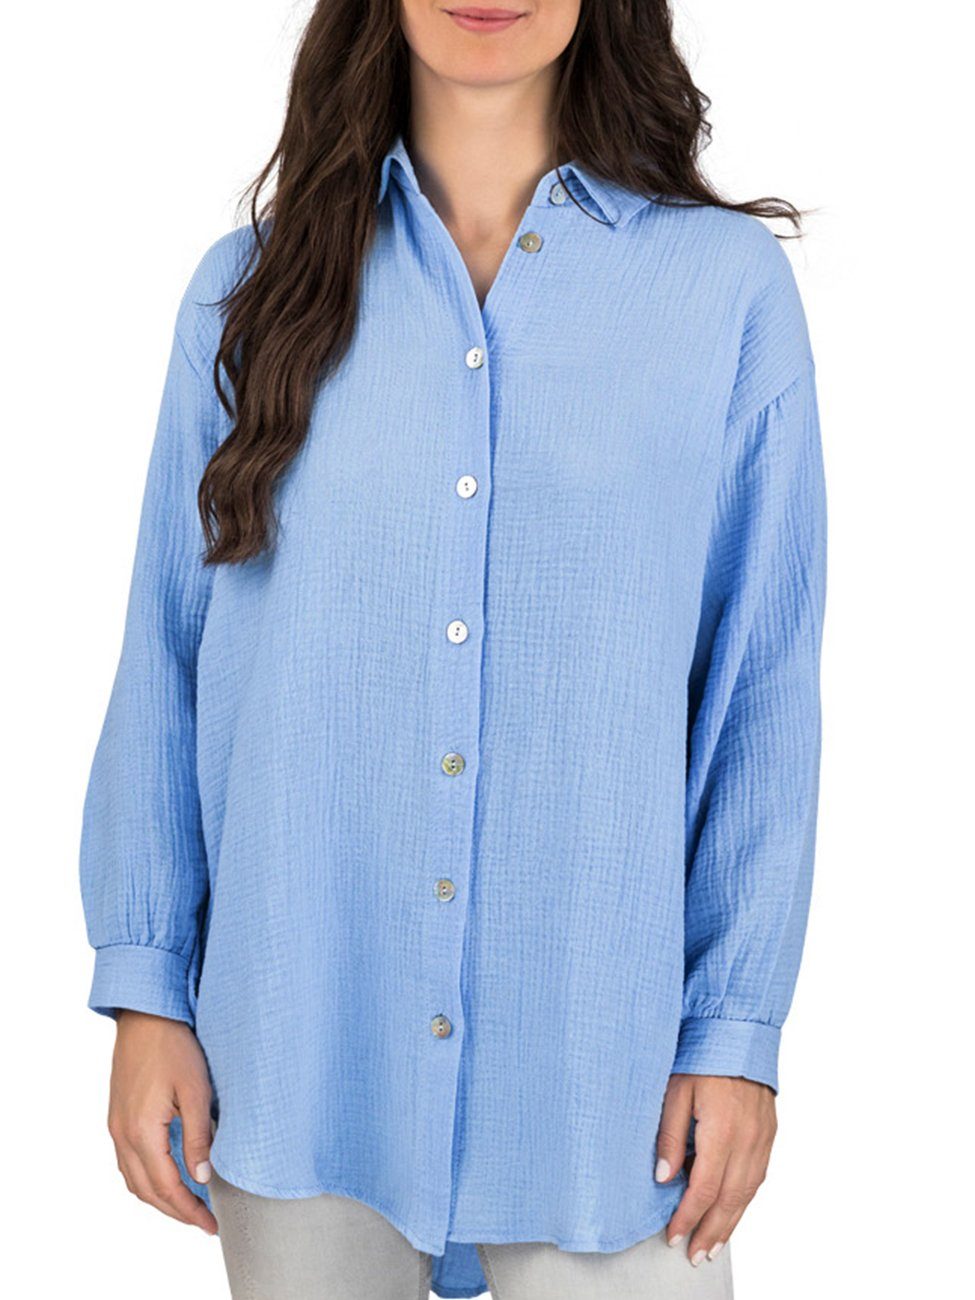 DENIMFY Hemdbluse Damen Bluse DFMathilda Oversize Fit Basic Musselin Hemd aus 100% Baumwolle Middle Blue (59319)